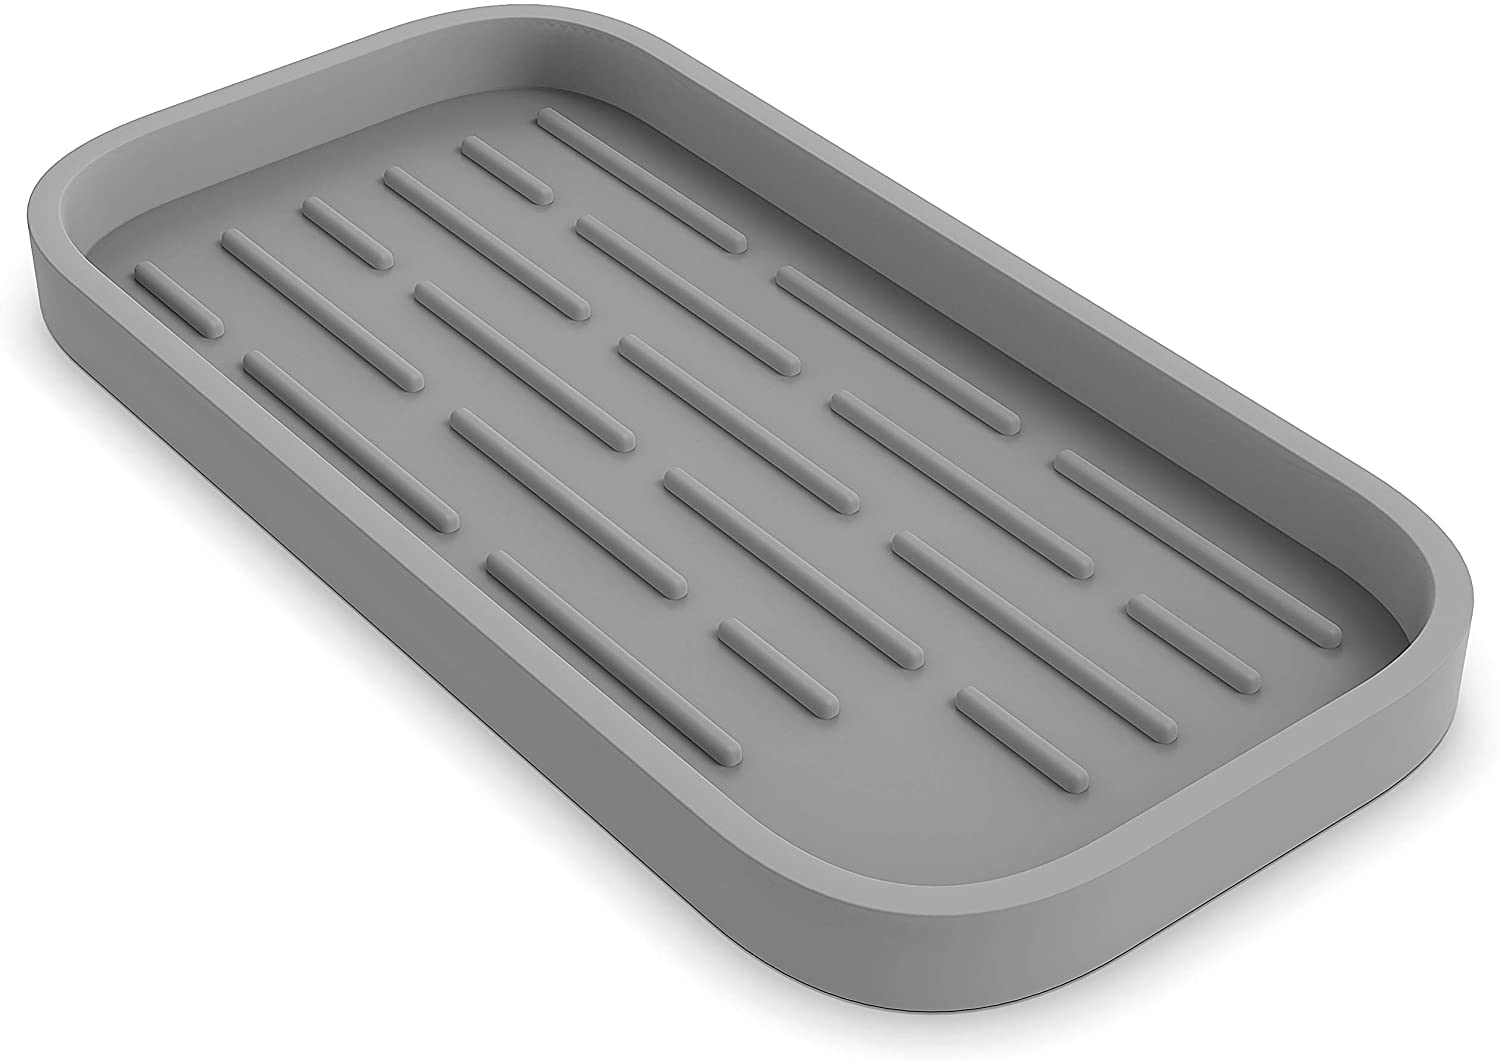 ZAPPOWARE Silicone Space Saving Kitchen Soap Tray